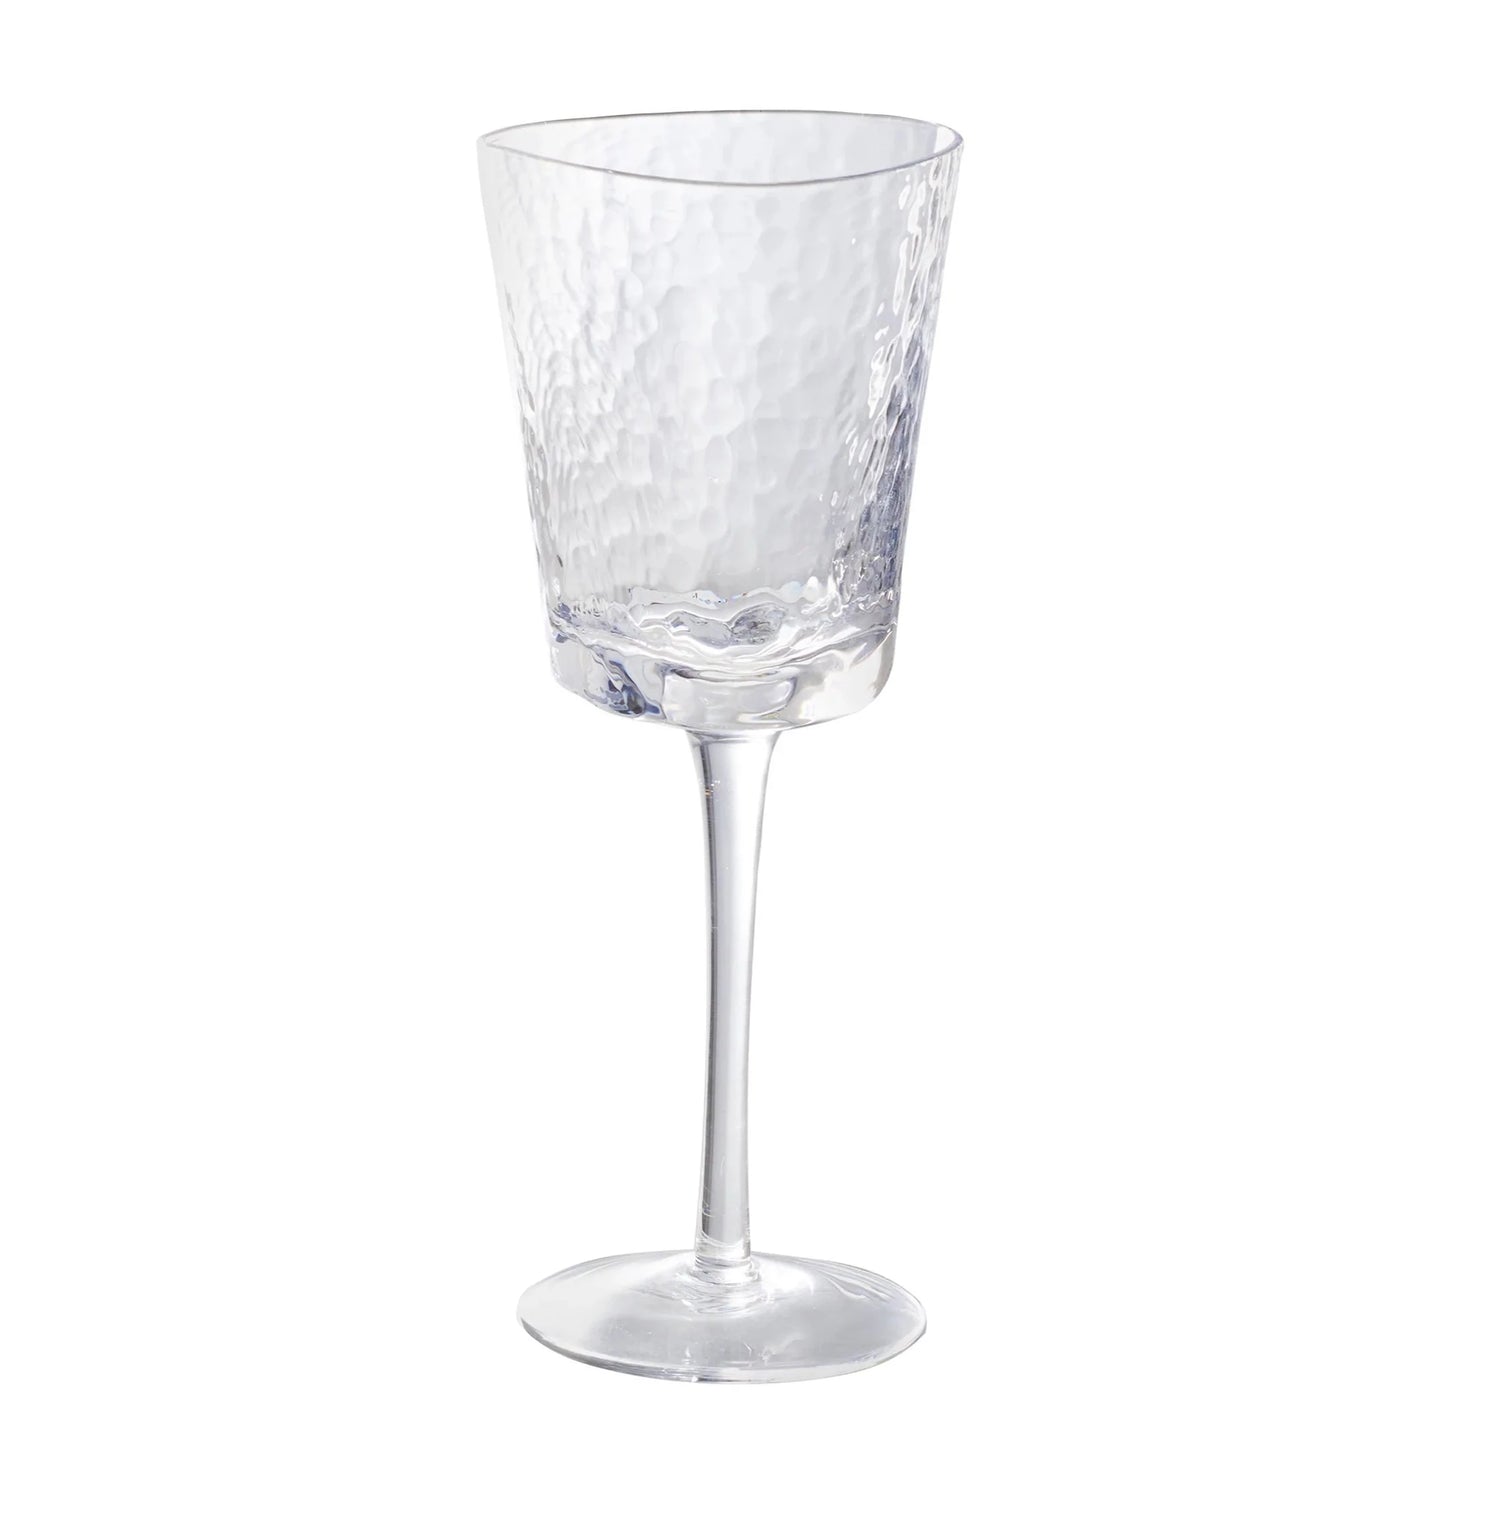 HGGDKDG Sake Pot Set Glass Wine Warmer Hot Wine Pot Home Wine  Glass Hammered Gold Edge Wine Glass Set (Color : A): Wine Glasses